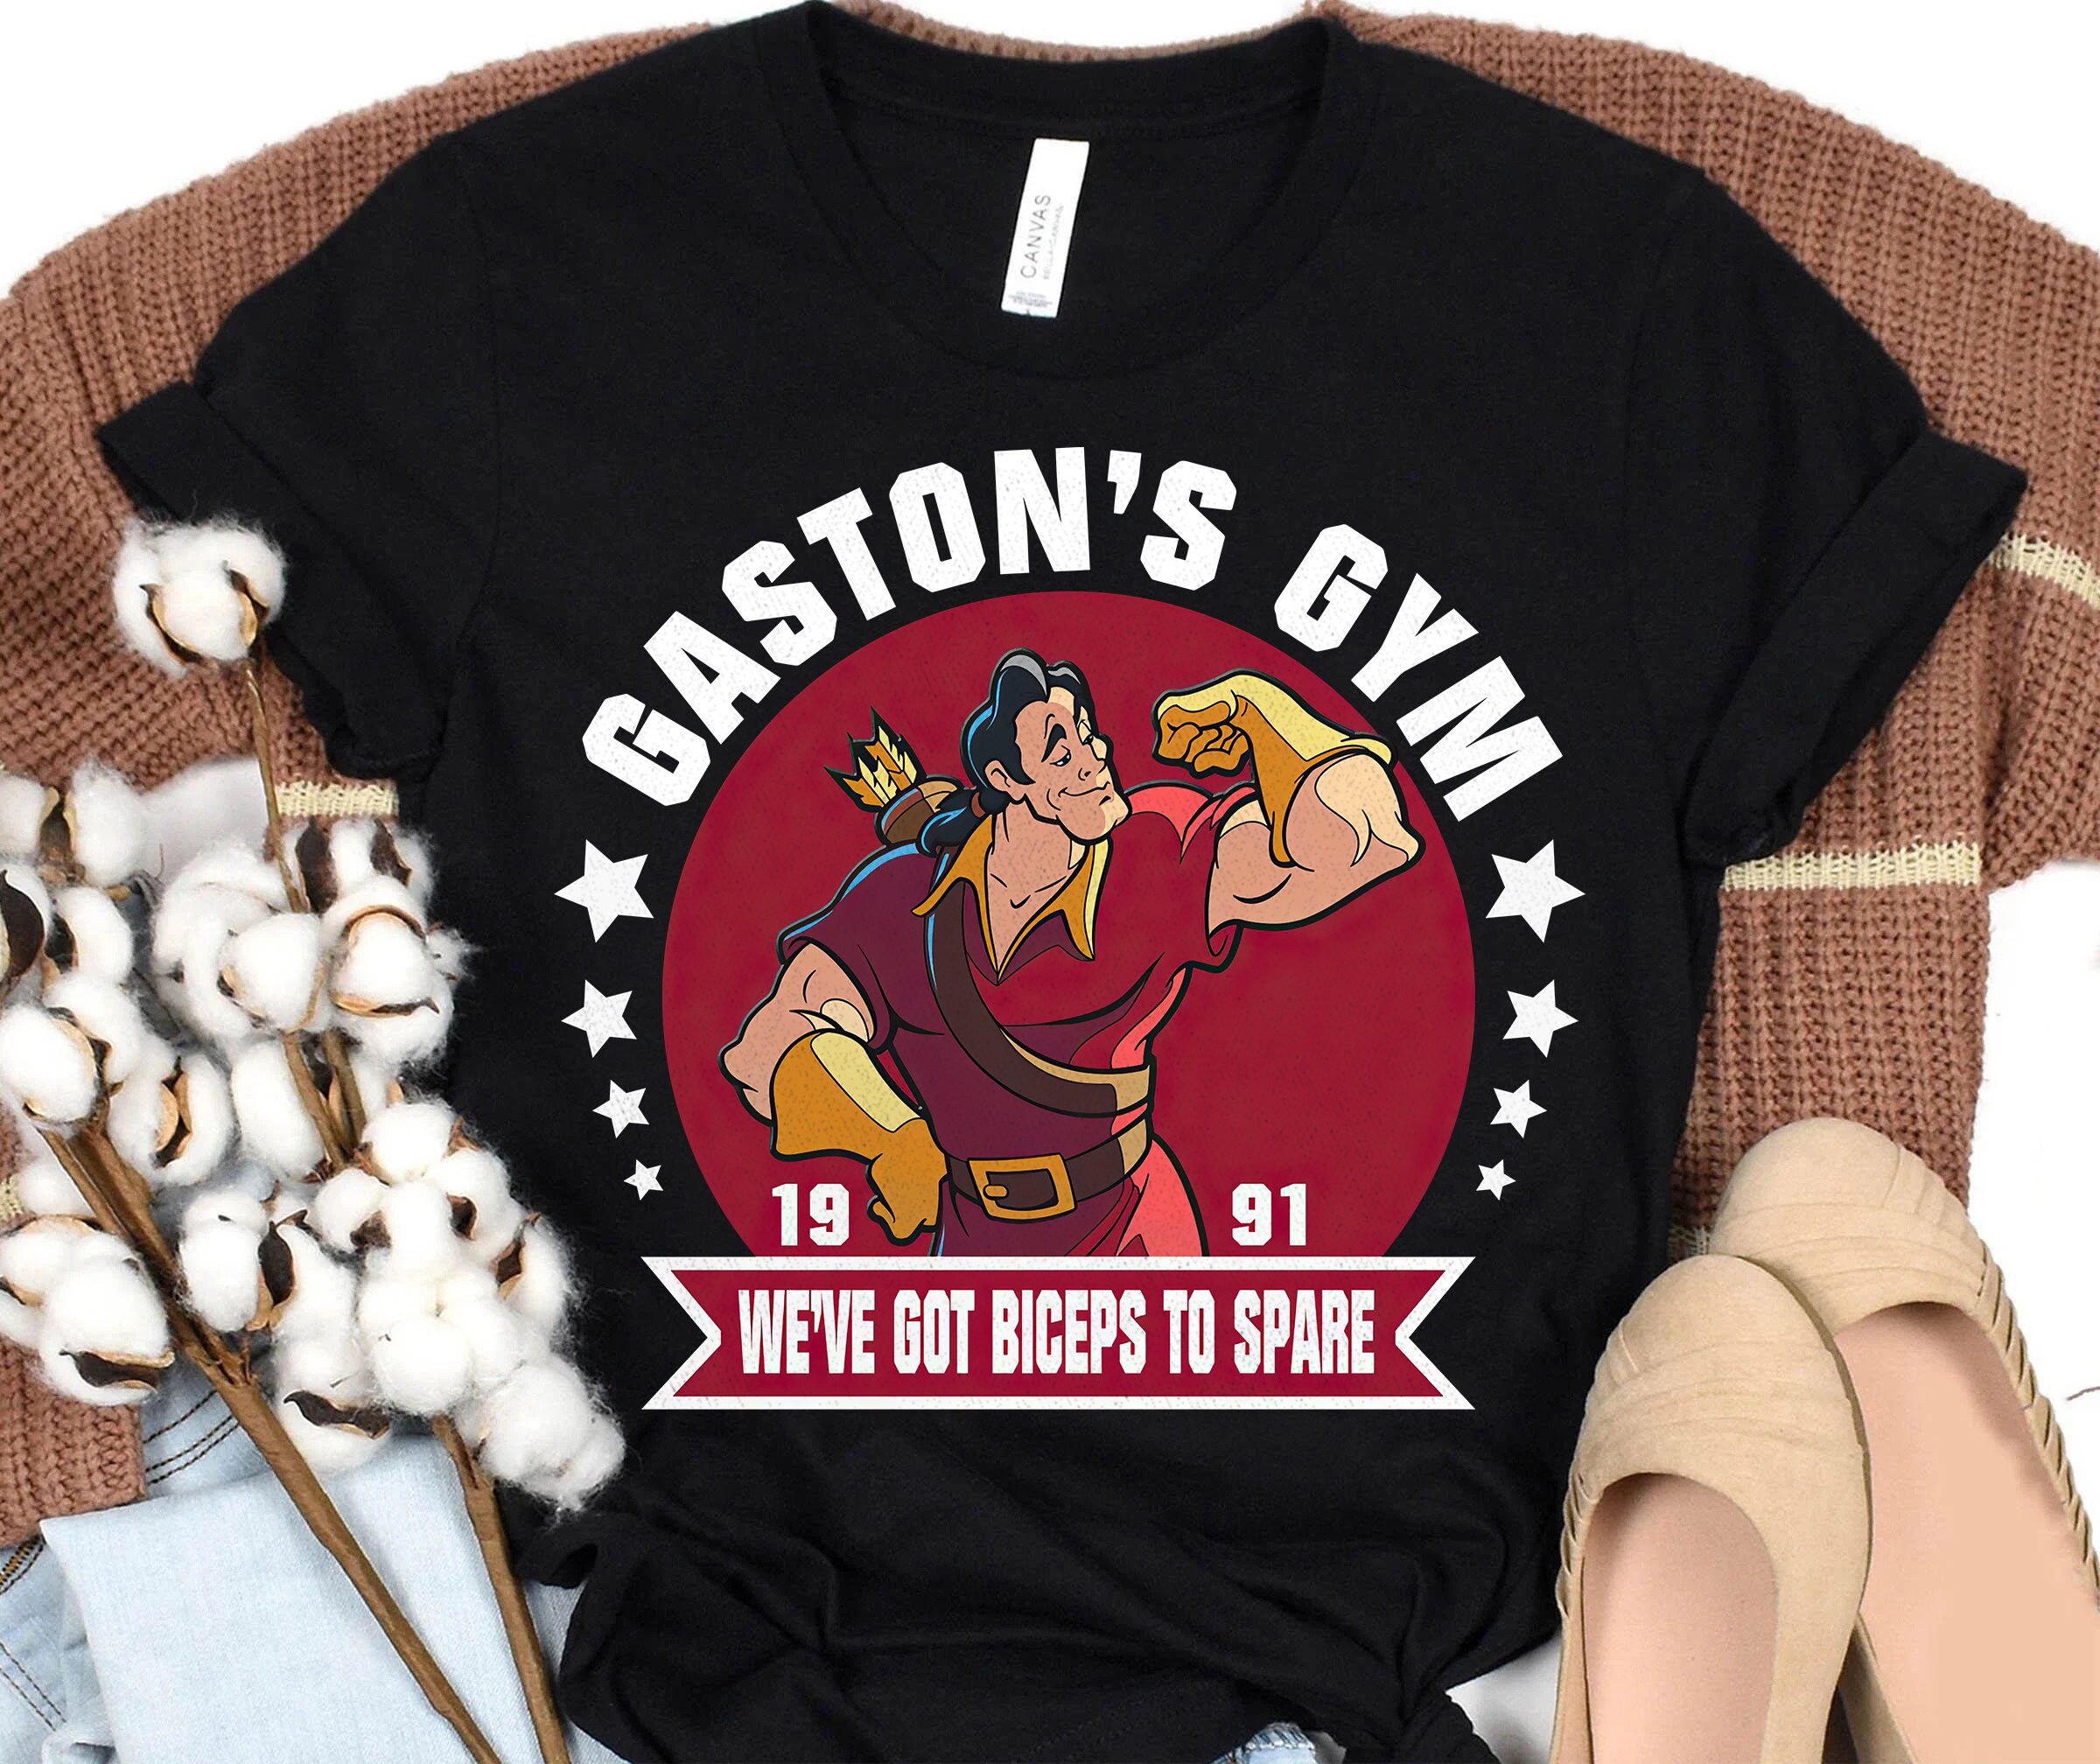 Gaston Gym Bag Charm S00 - Men - Accessories